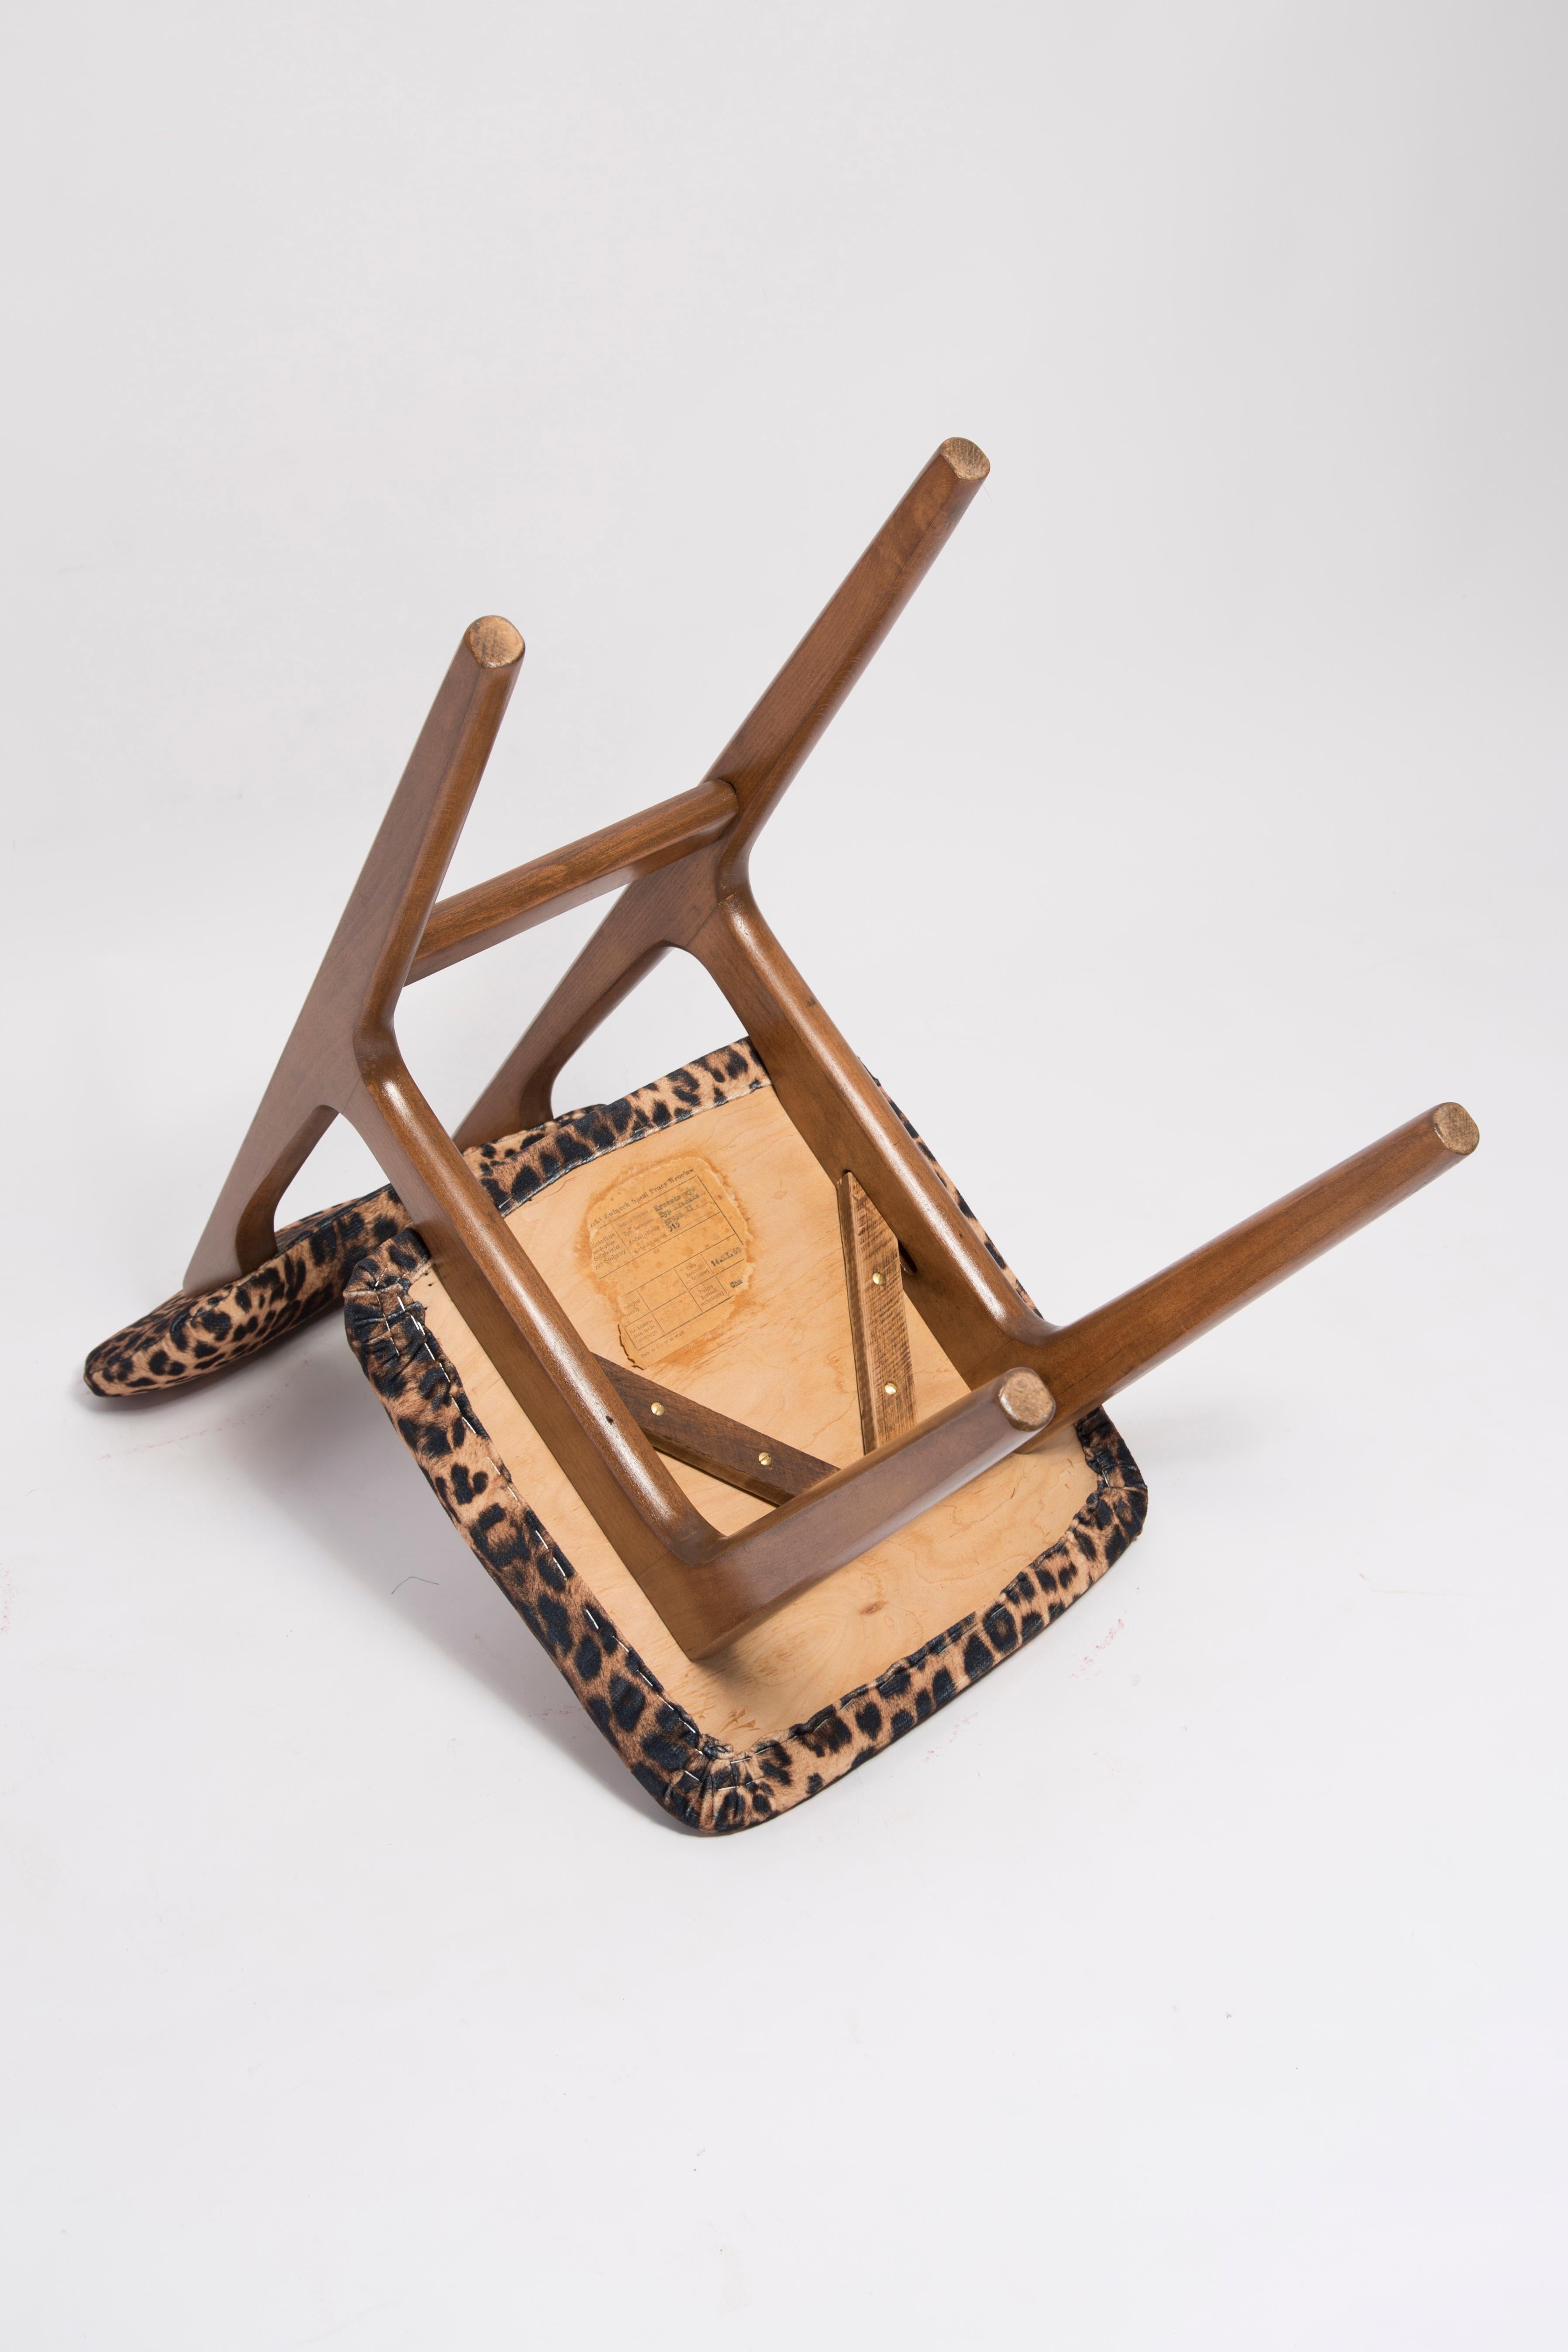 Six Mid Century Leopard Velvet Chairs, Walnut Wood, Rajmund Halas, Poland, 1960s For Sale 2